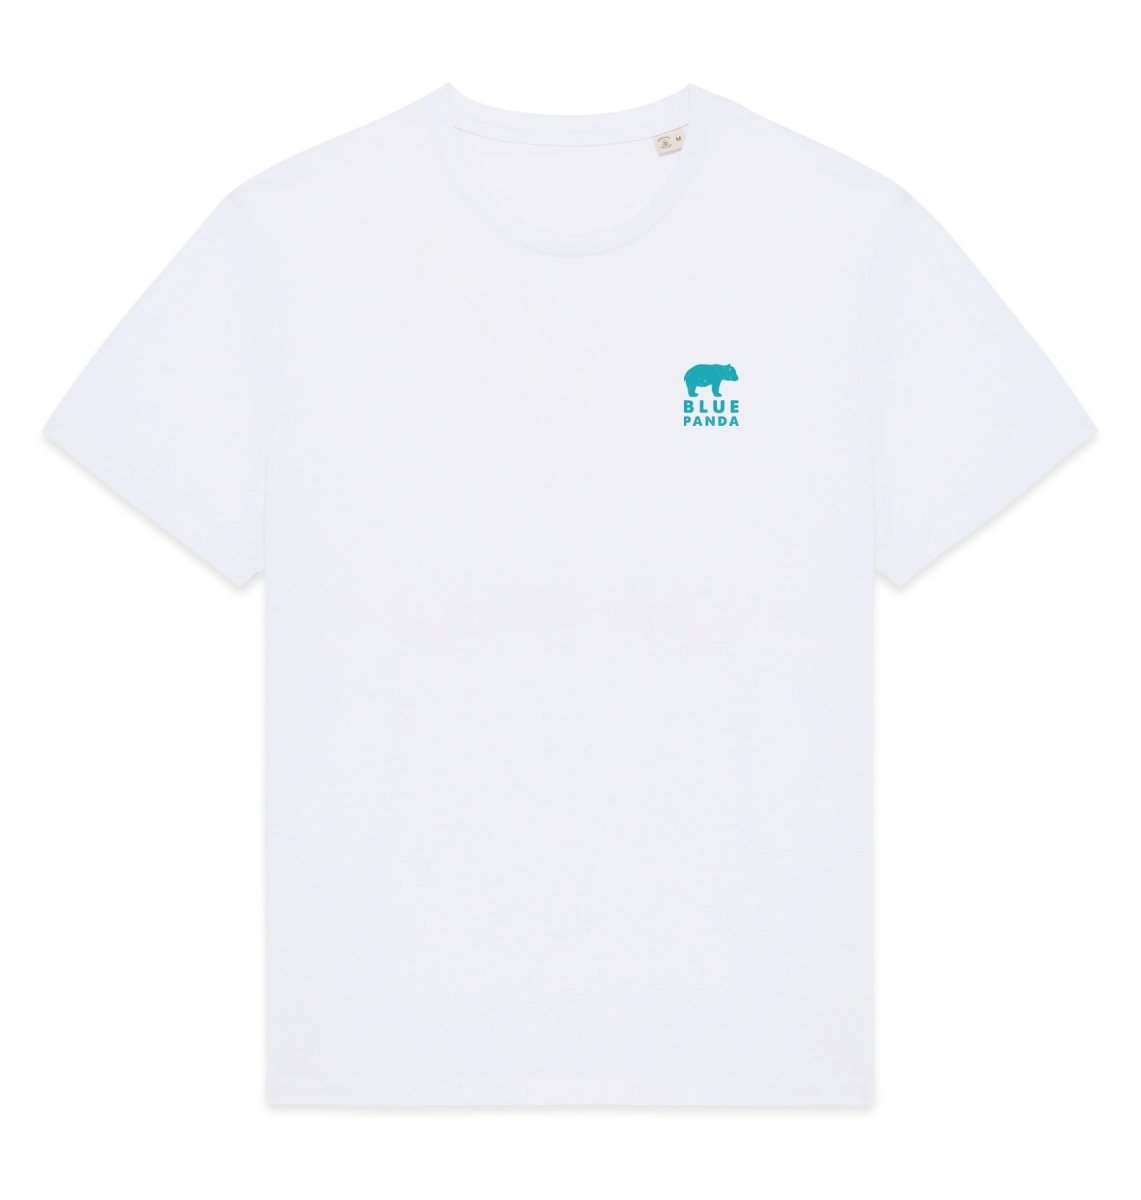 Jellyfish Womens T-shirt - Blue Panda